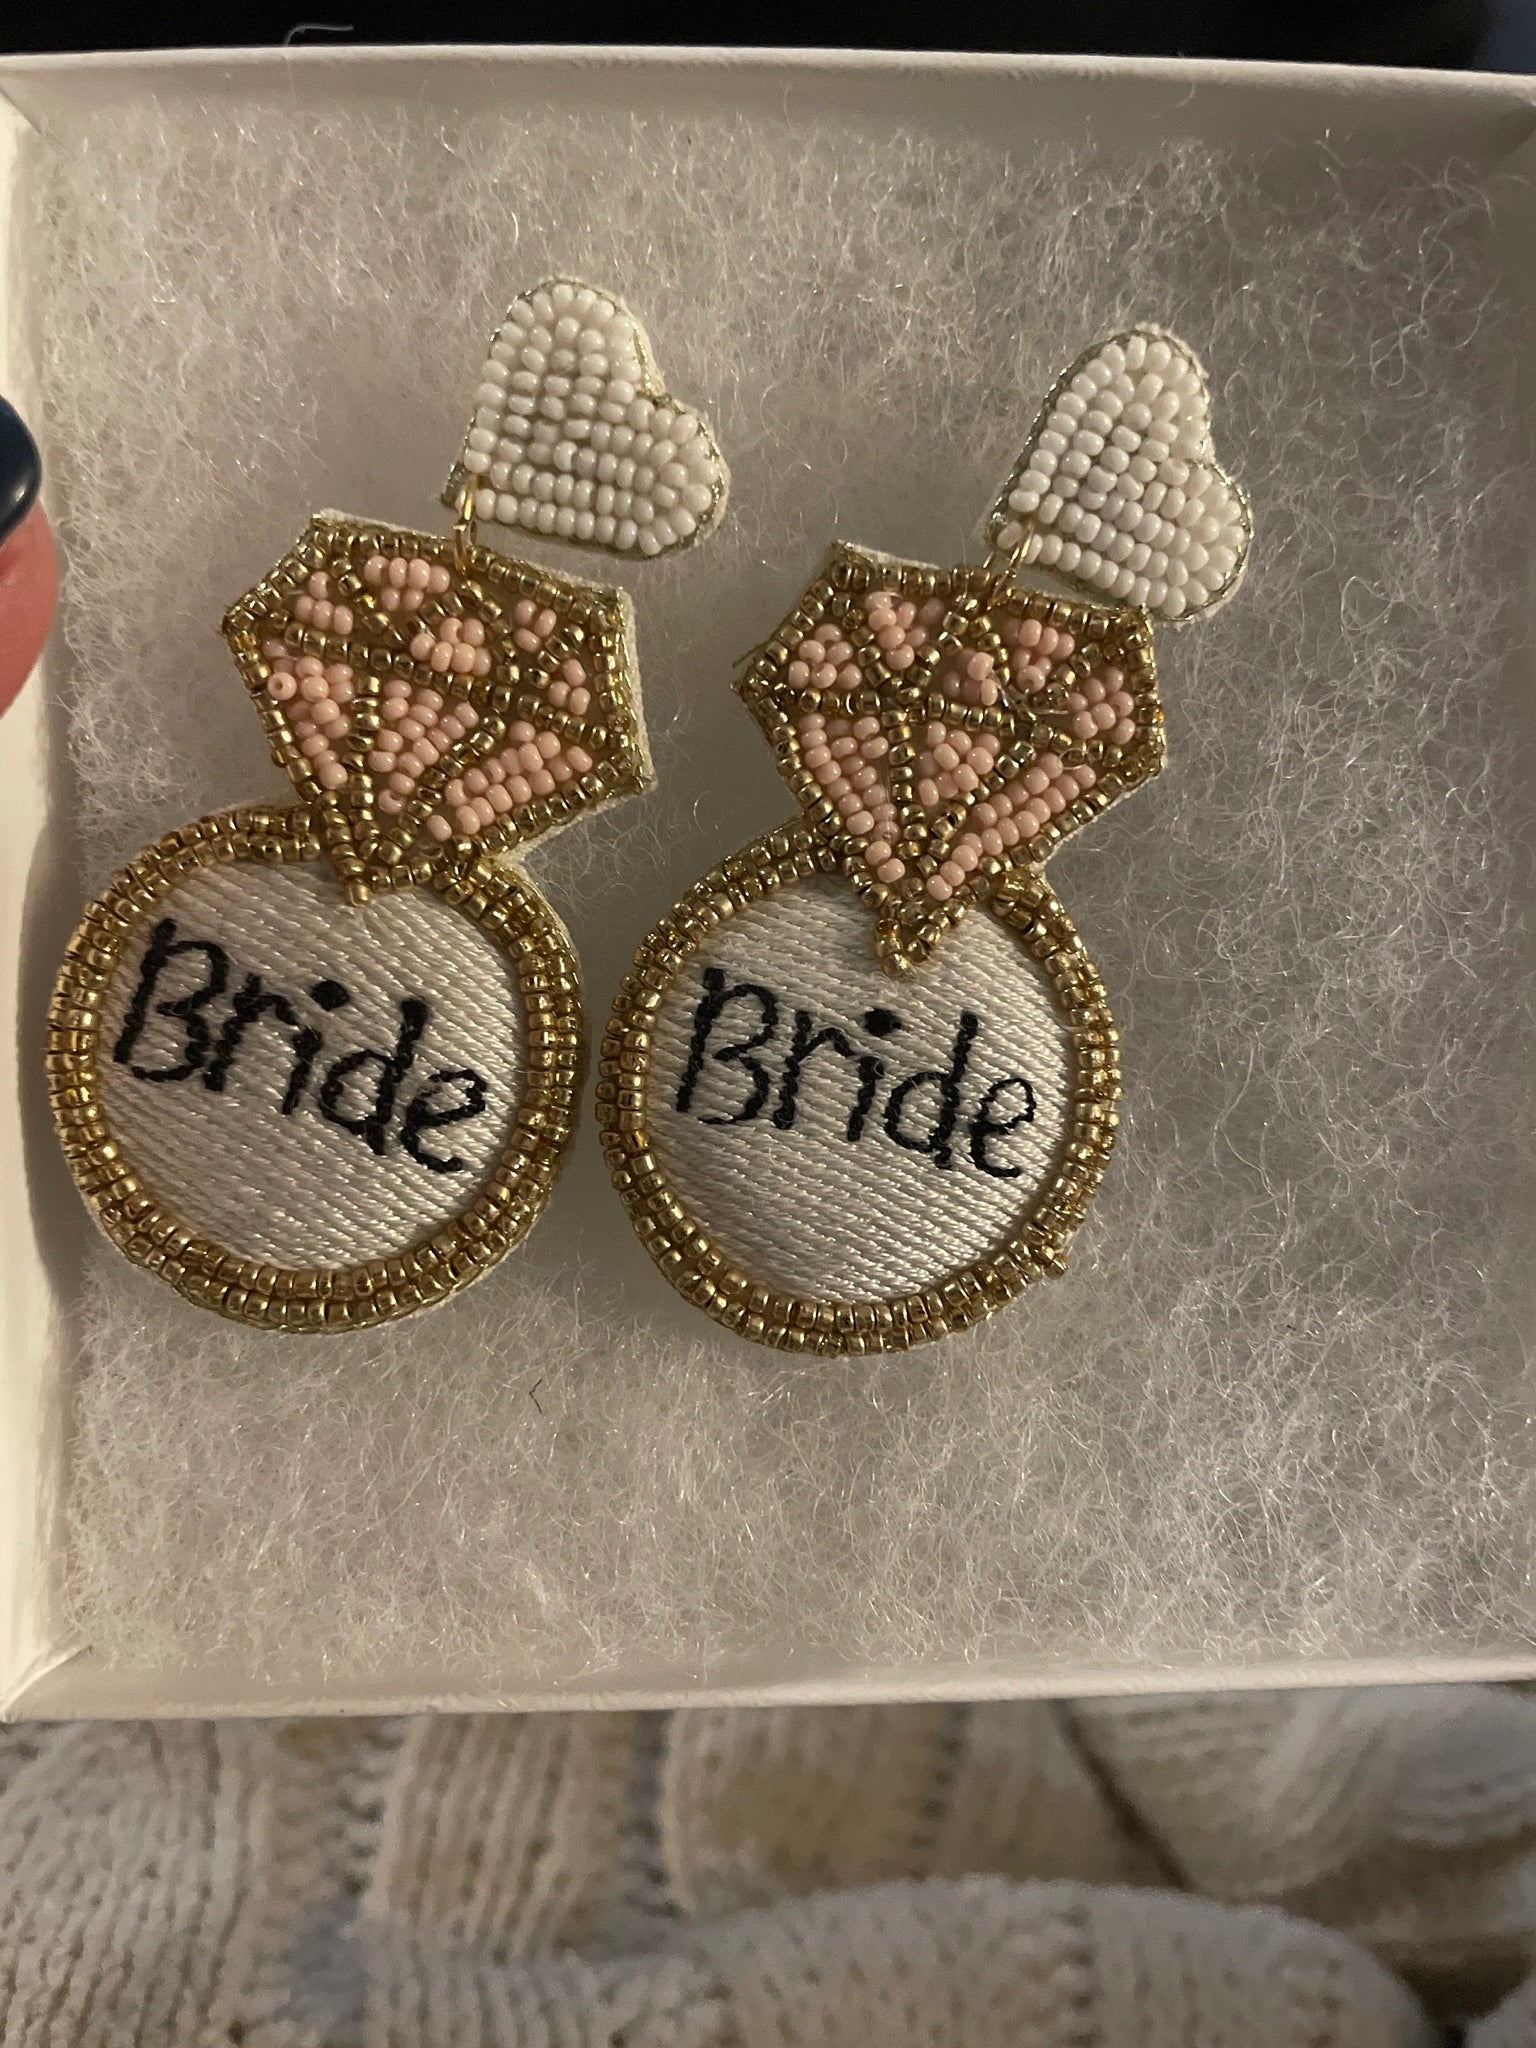 Diamond Ring Bride Earrings